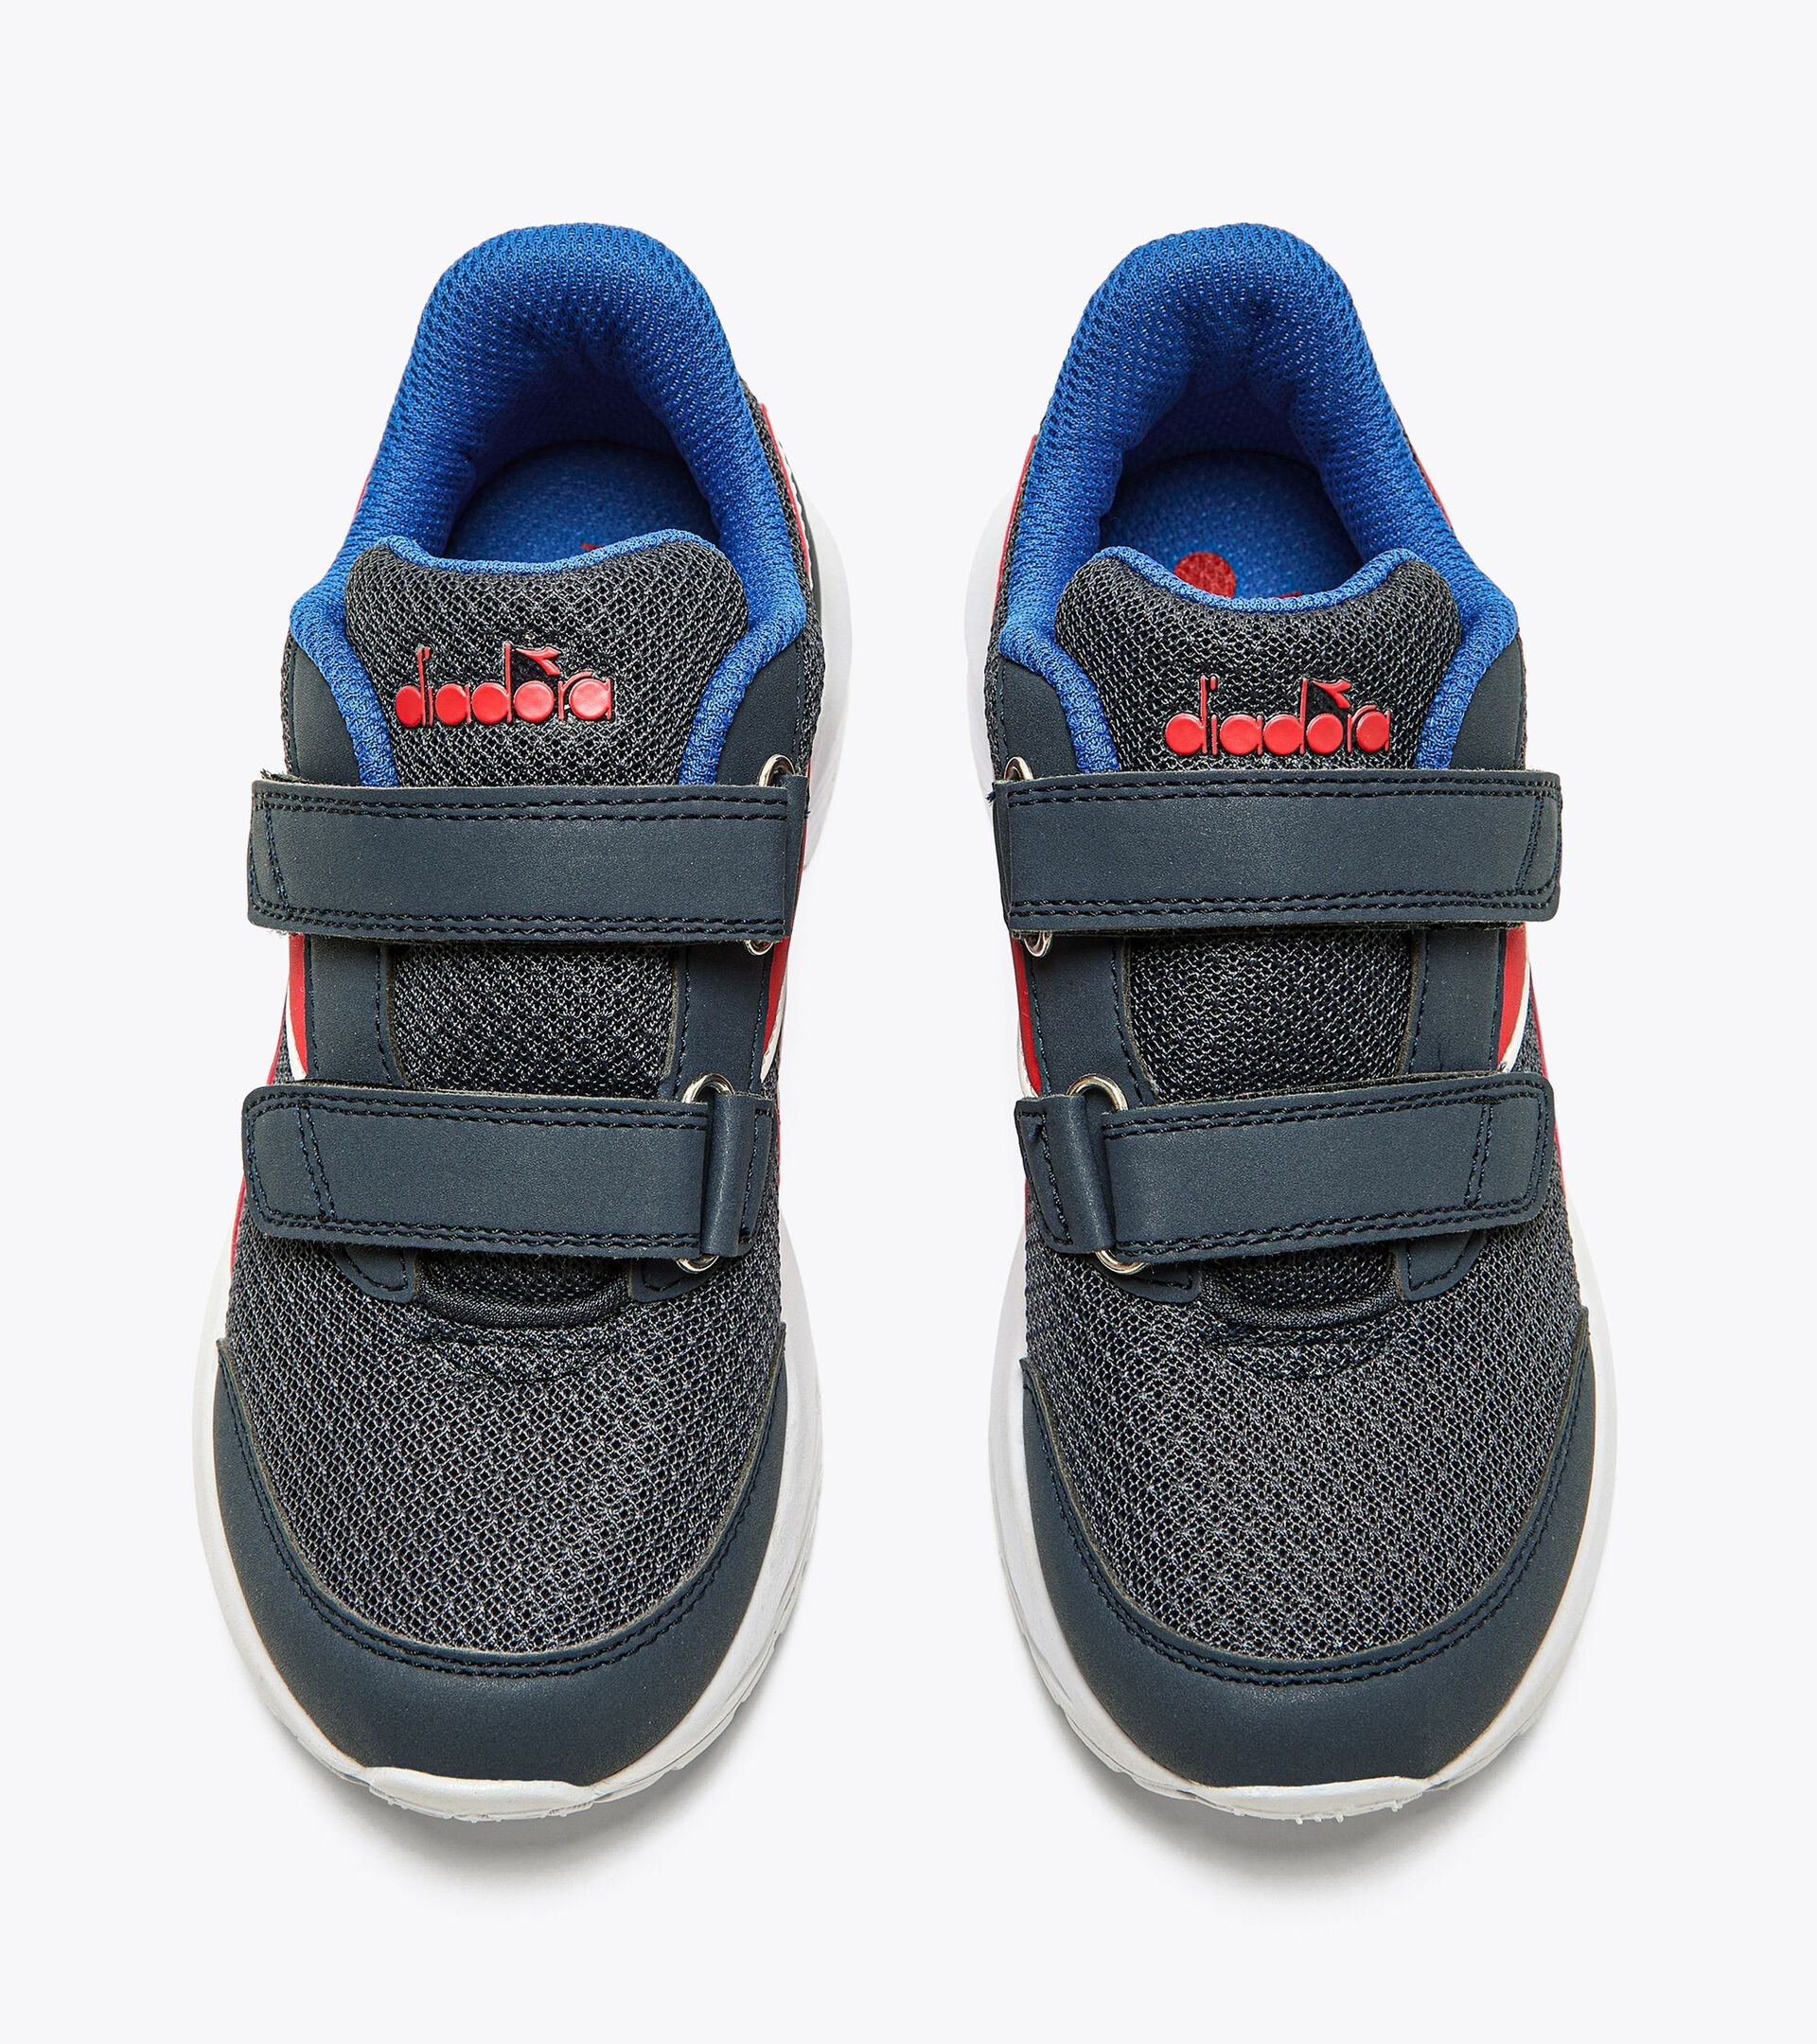 Junior running shoes - Gender Neutral FALCON 3 JR V BLUE CORSAIR /HIGH RISK RED - Diadora